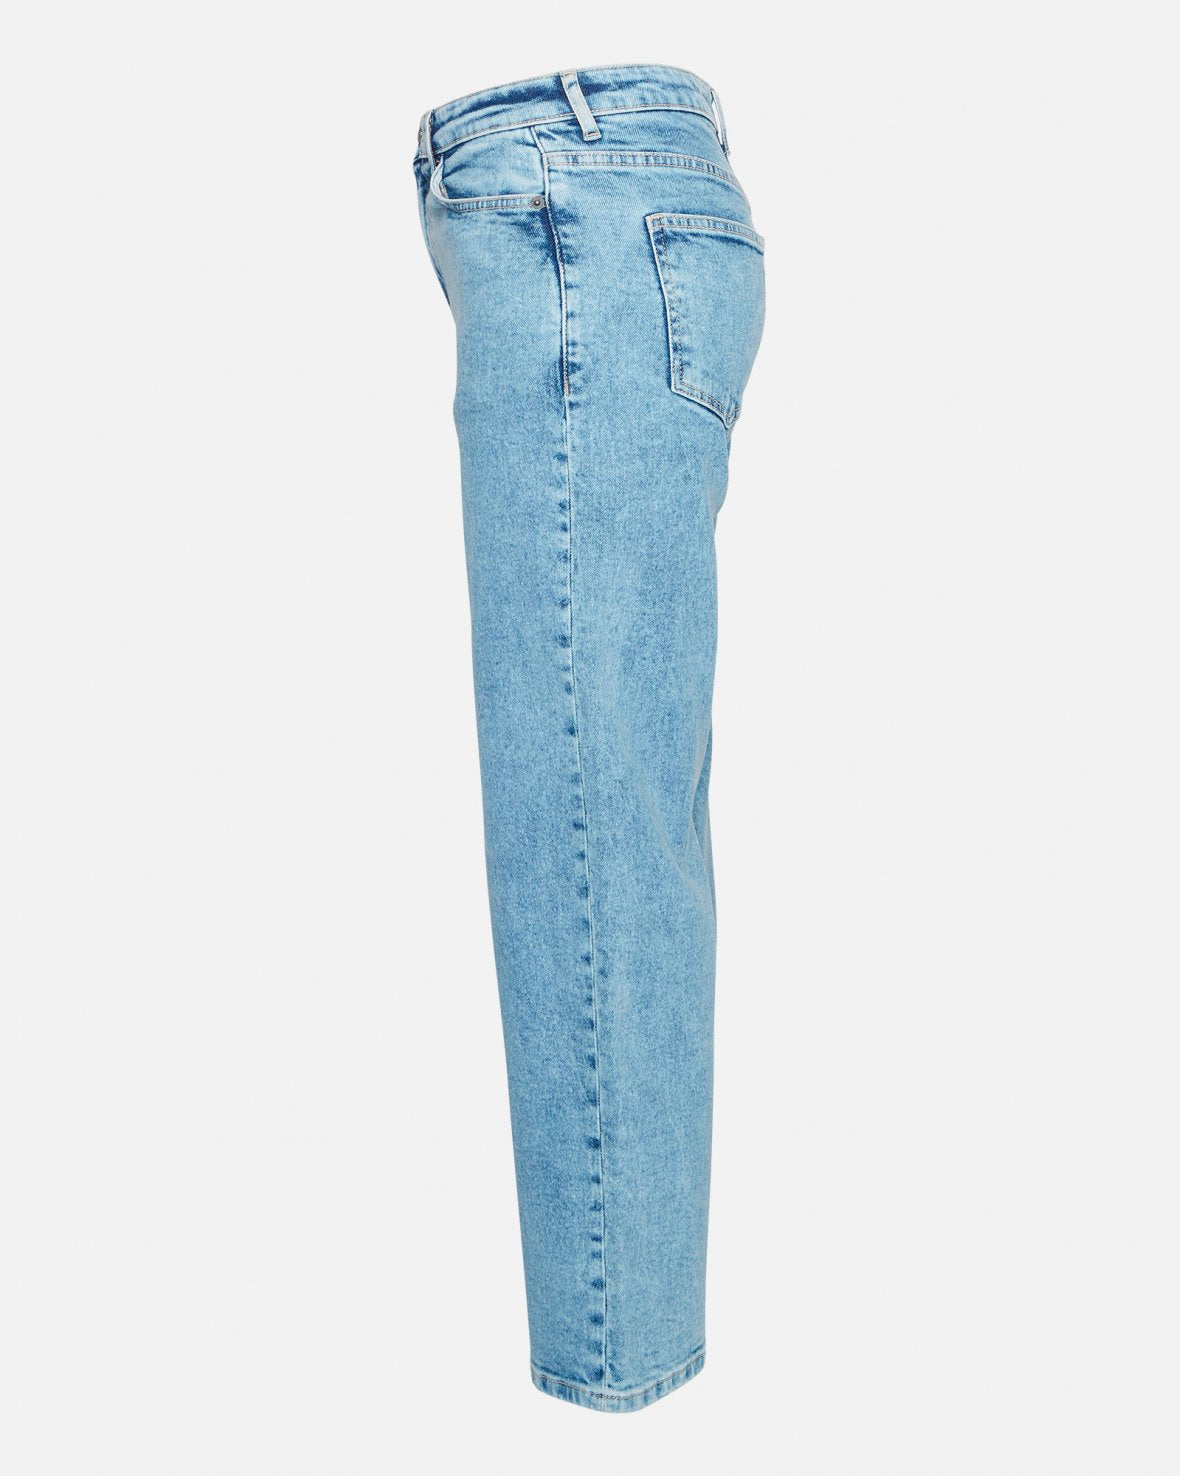 MSCH Eike Rikka Ankle Jeans in Light Blue Washbm